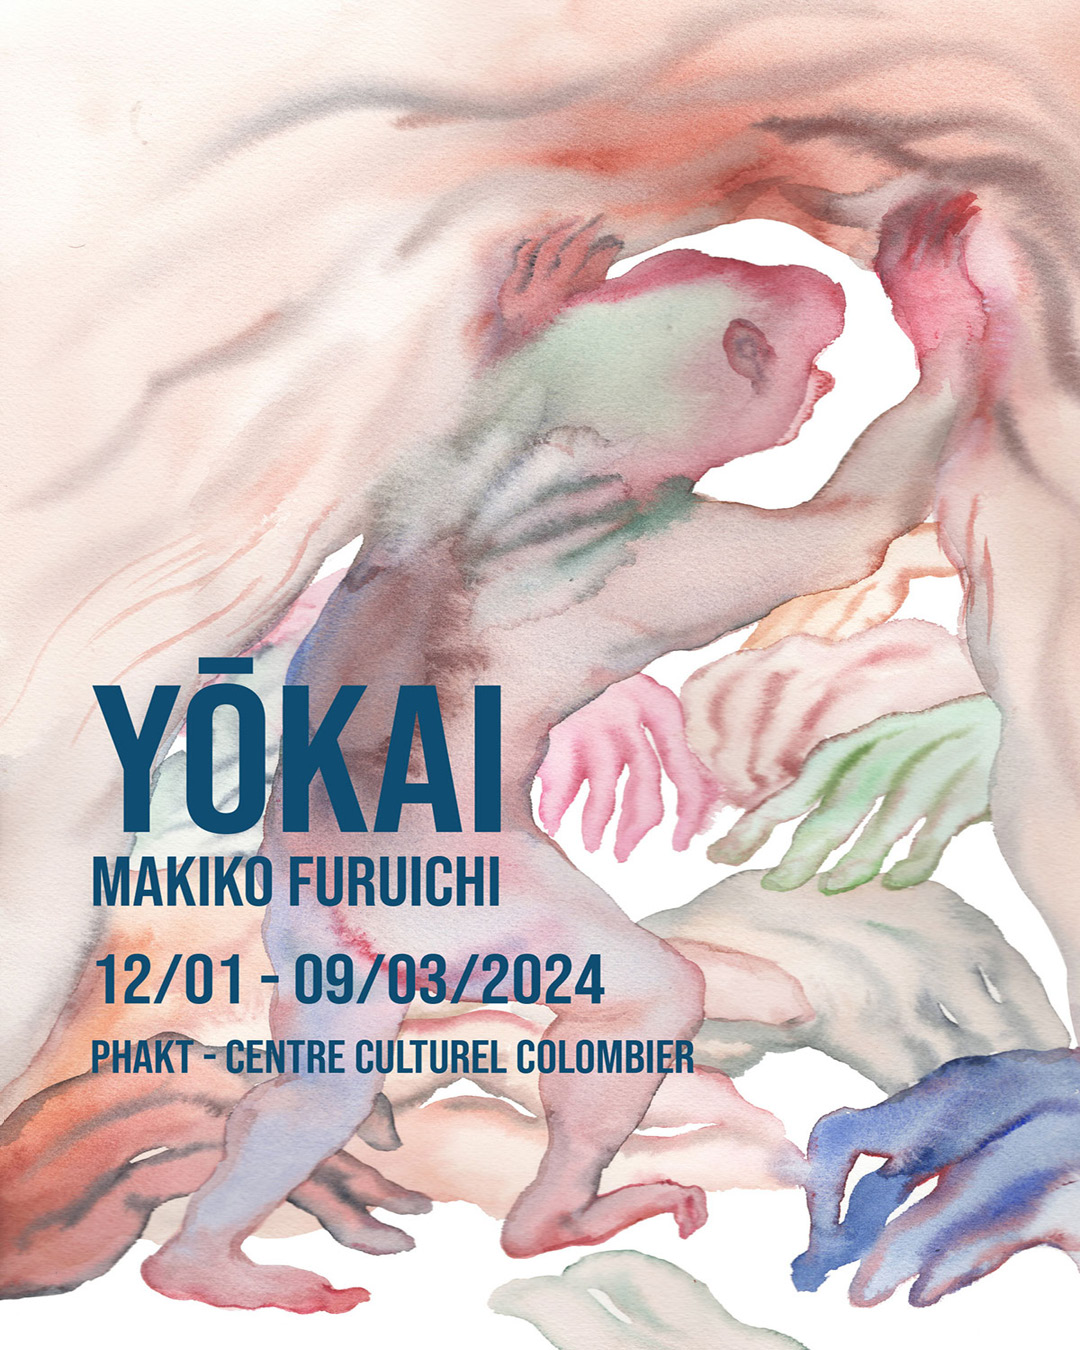 Visuel de l'exposition Yōkai de l'artiste Makiko Furuichi